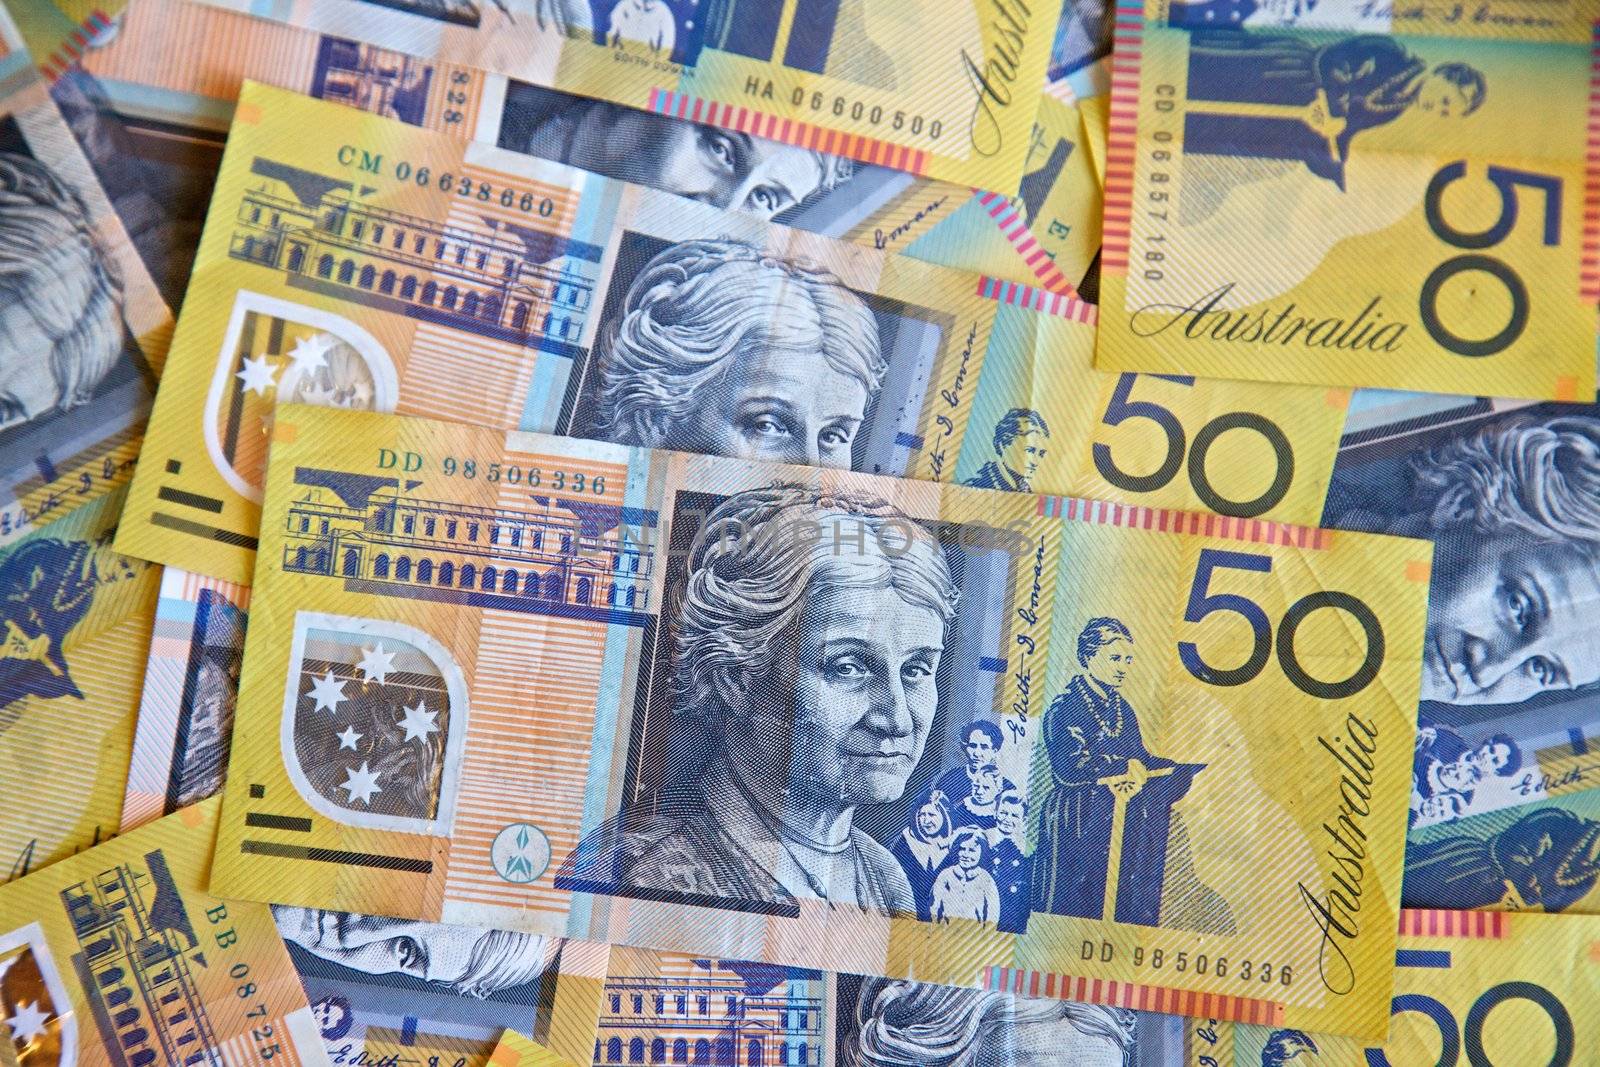 Australian dollars, bank notes